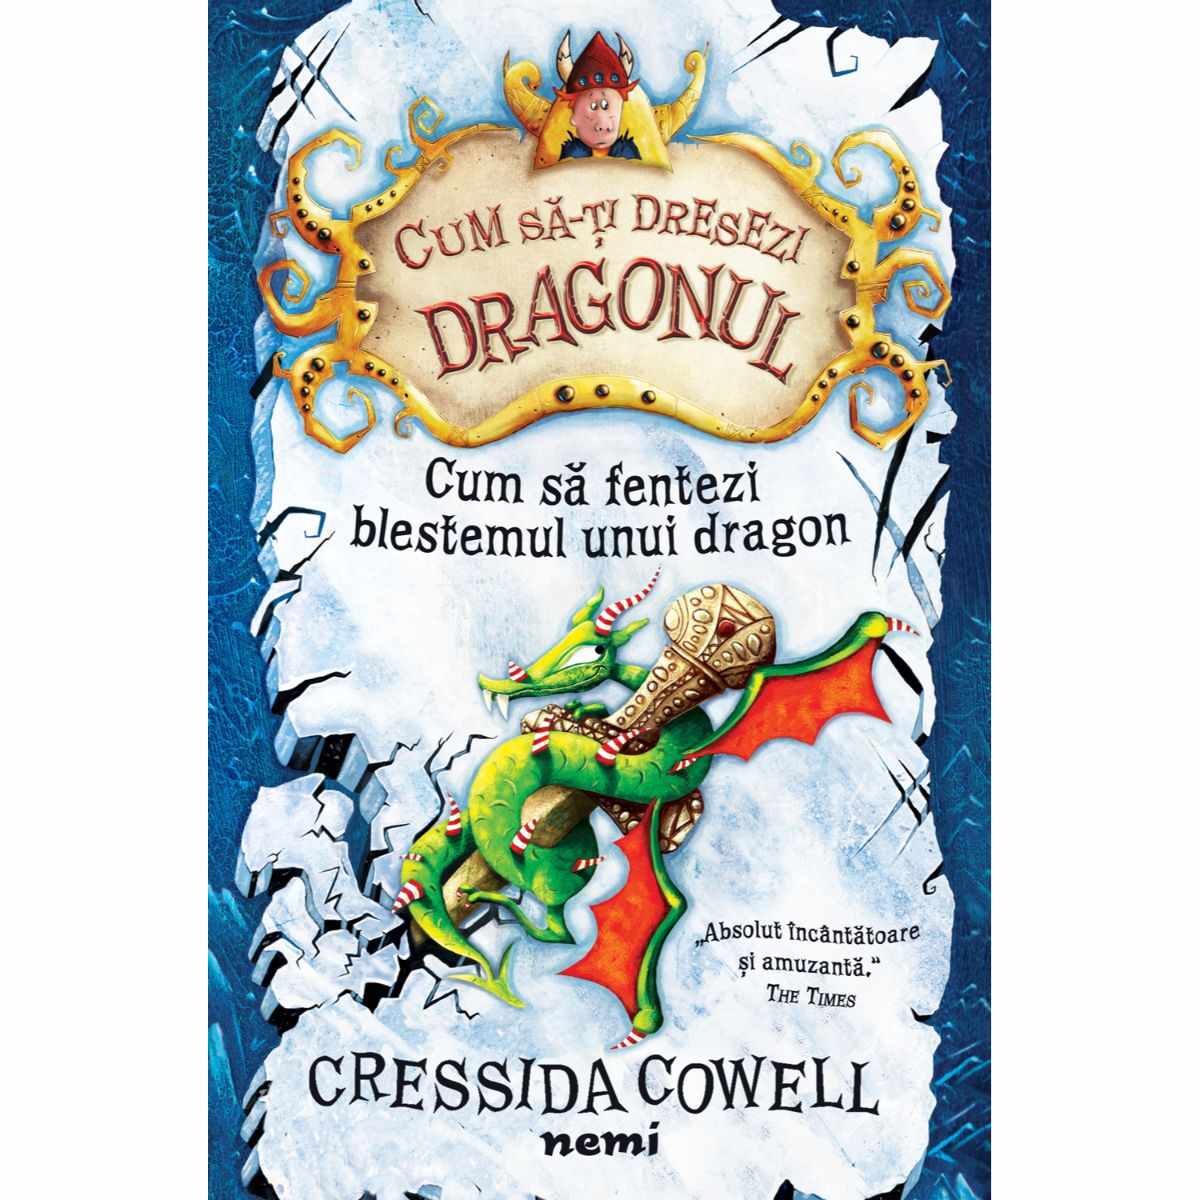 Cum sa fentezi blestemul unui dragon, Cressida Cowell